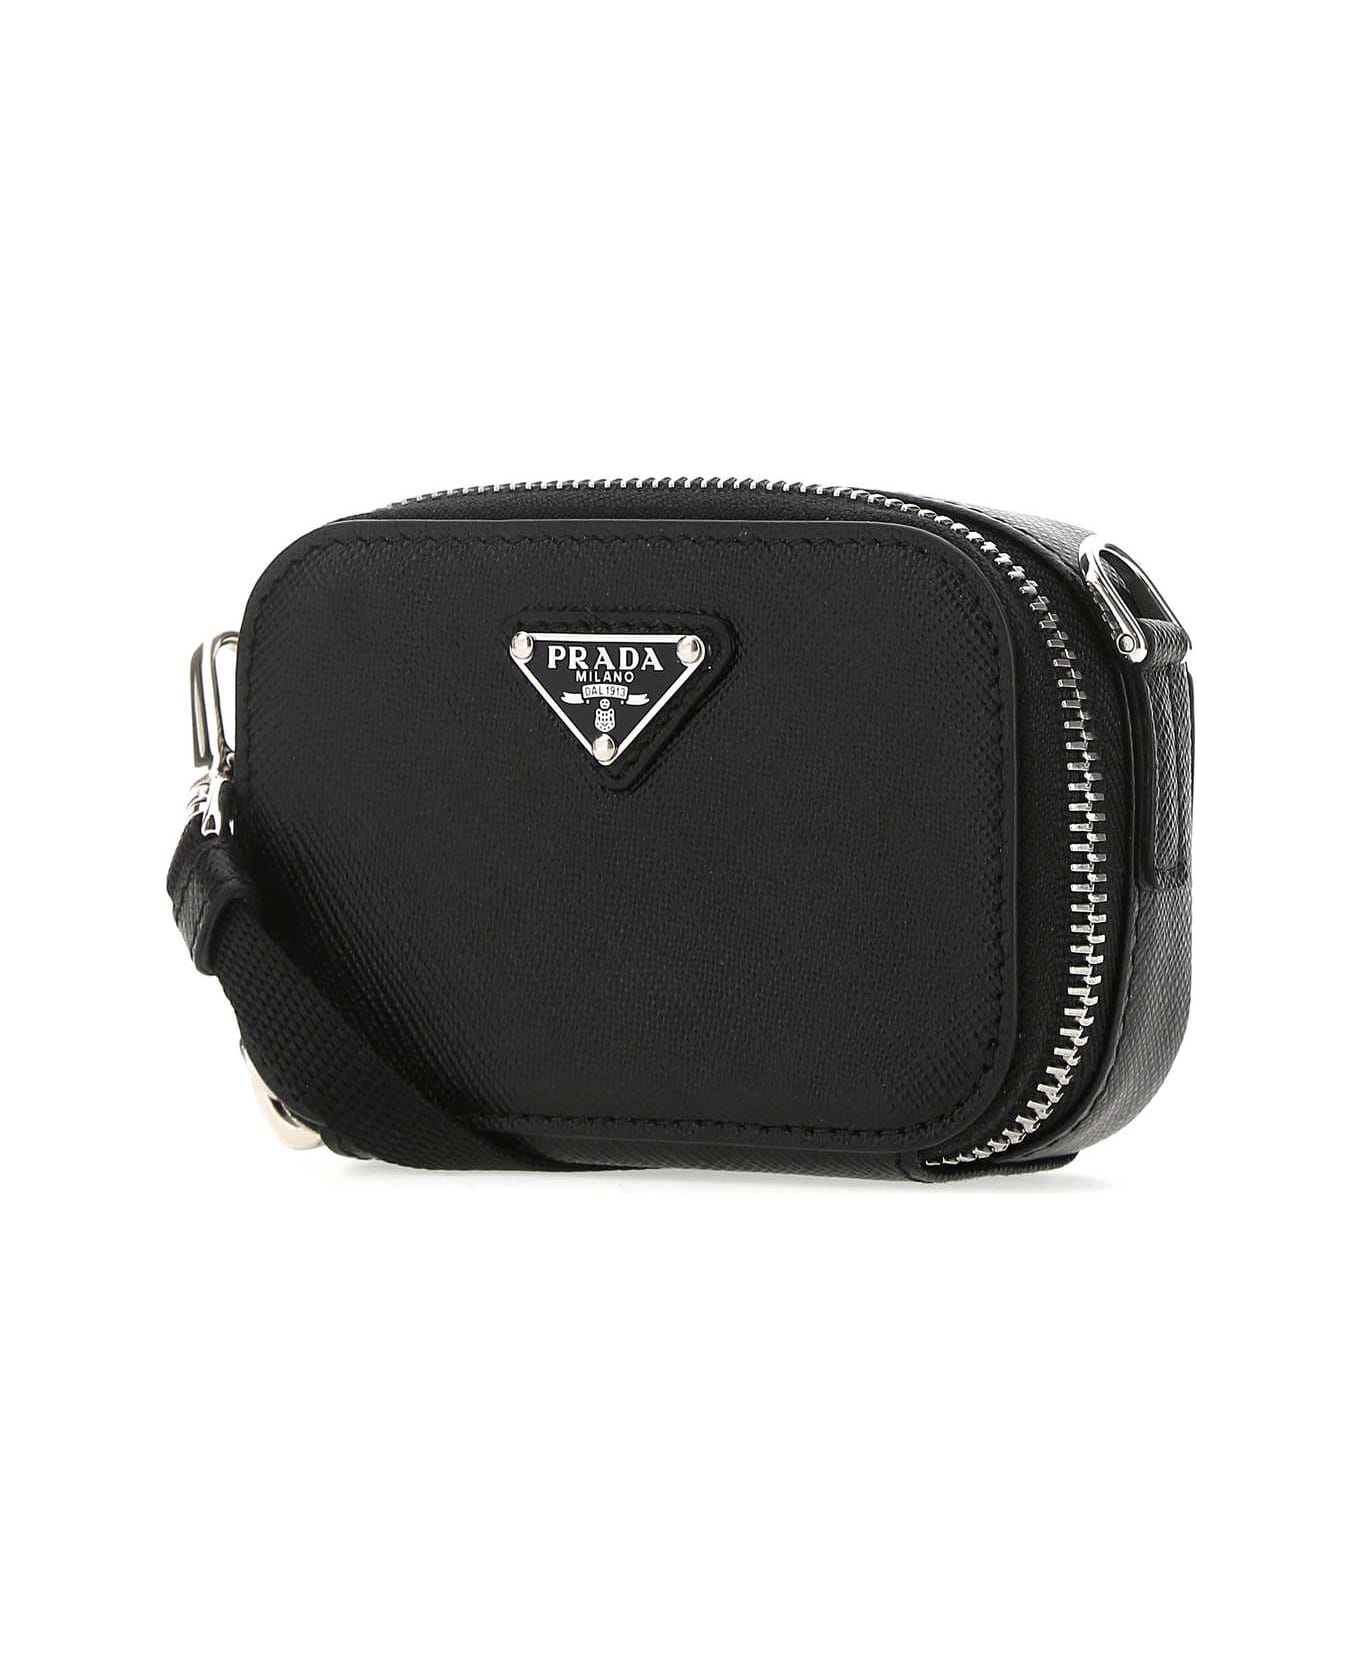 Prada Black Leather Crossbody Bag - F0002